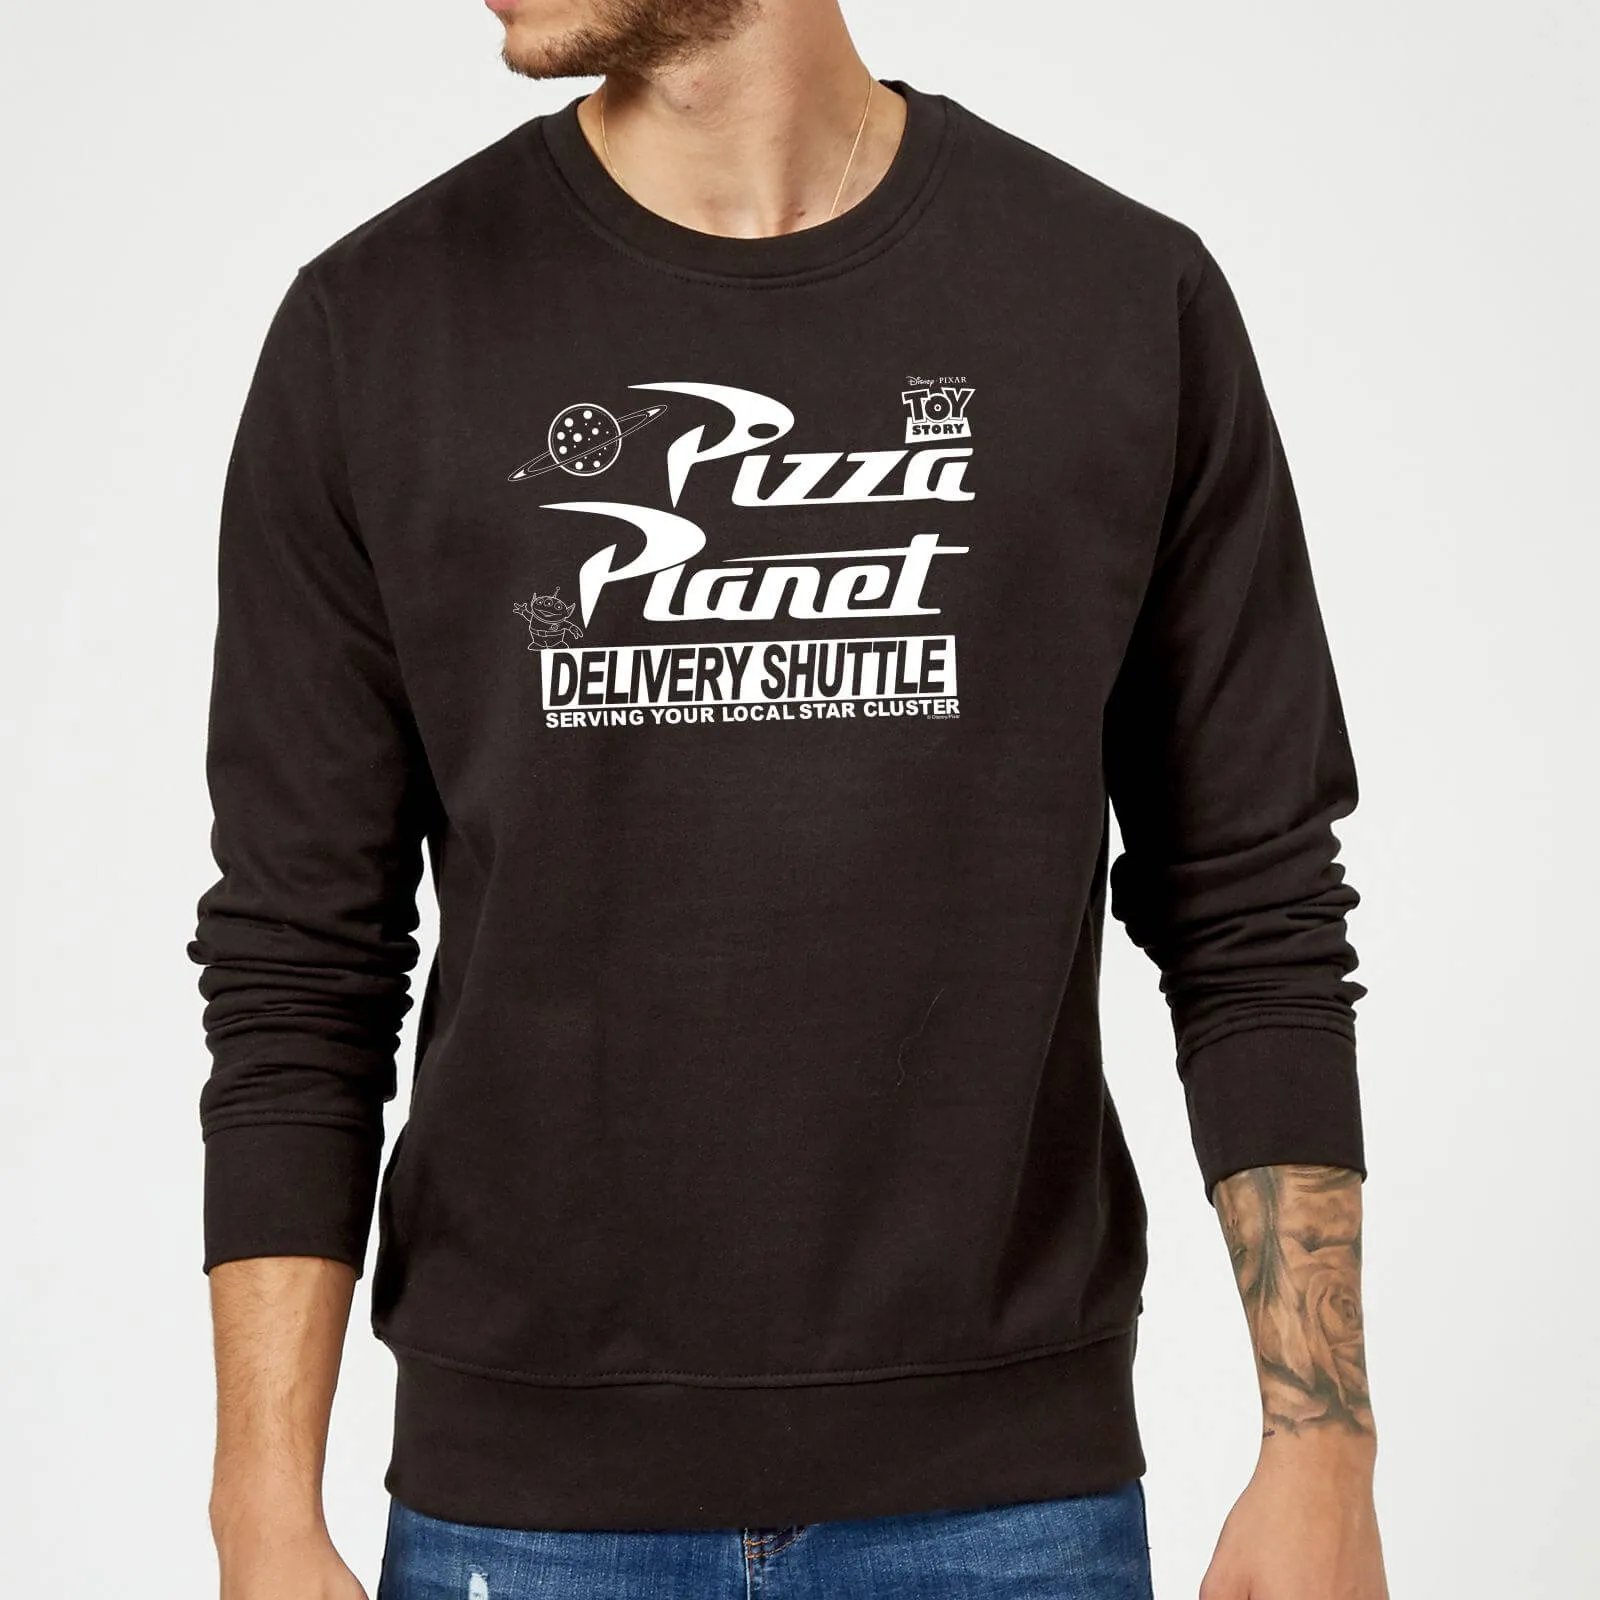 Toy Story Pizza Planet Logo Sweatshirt - Black - XXL